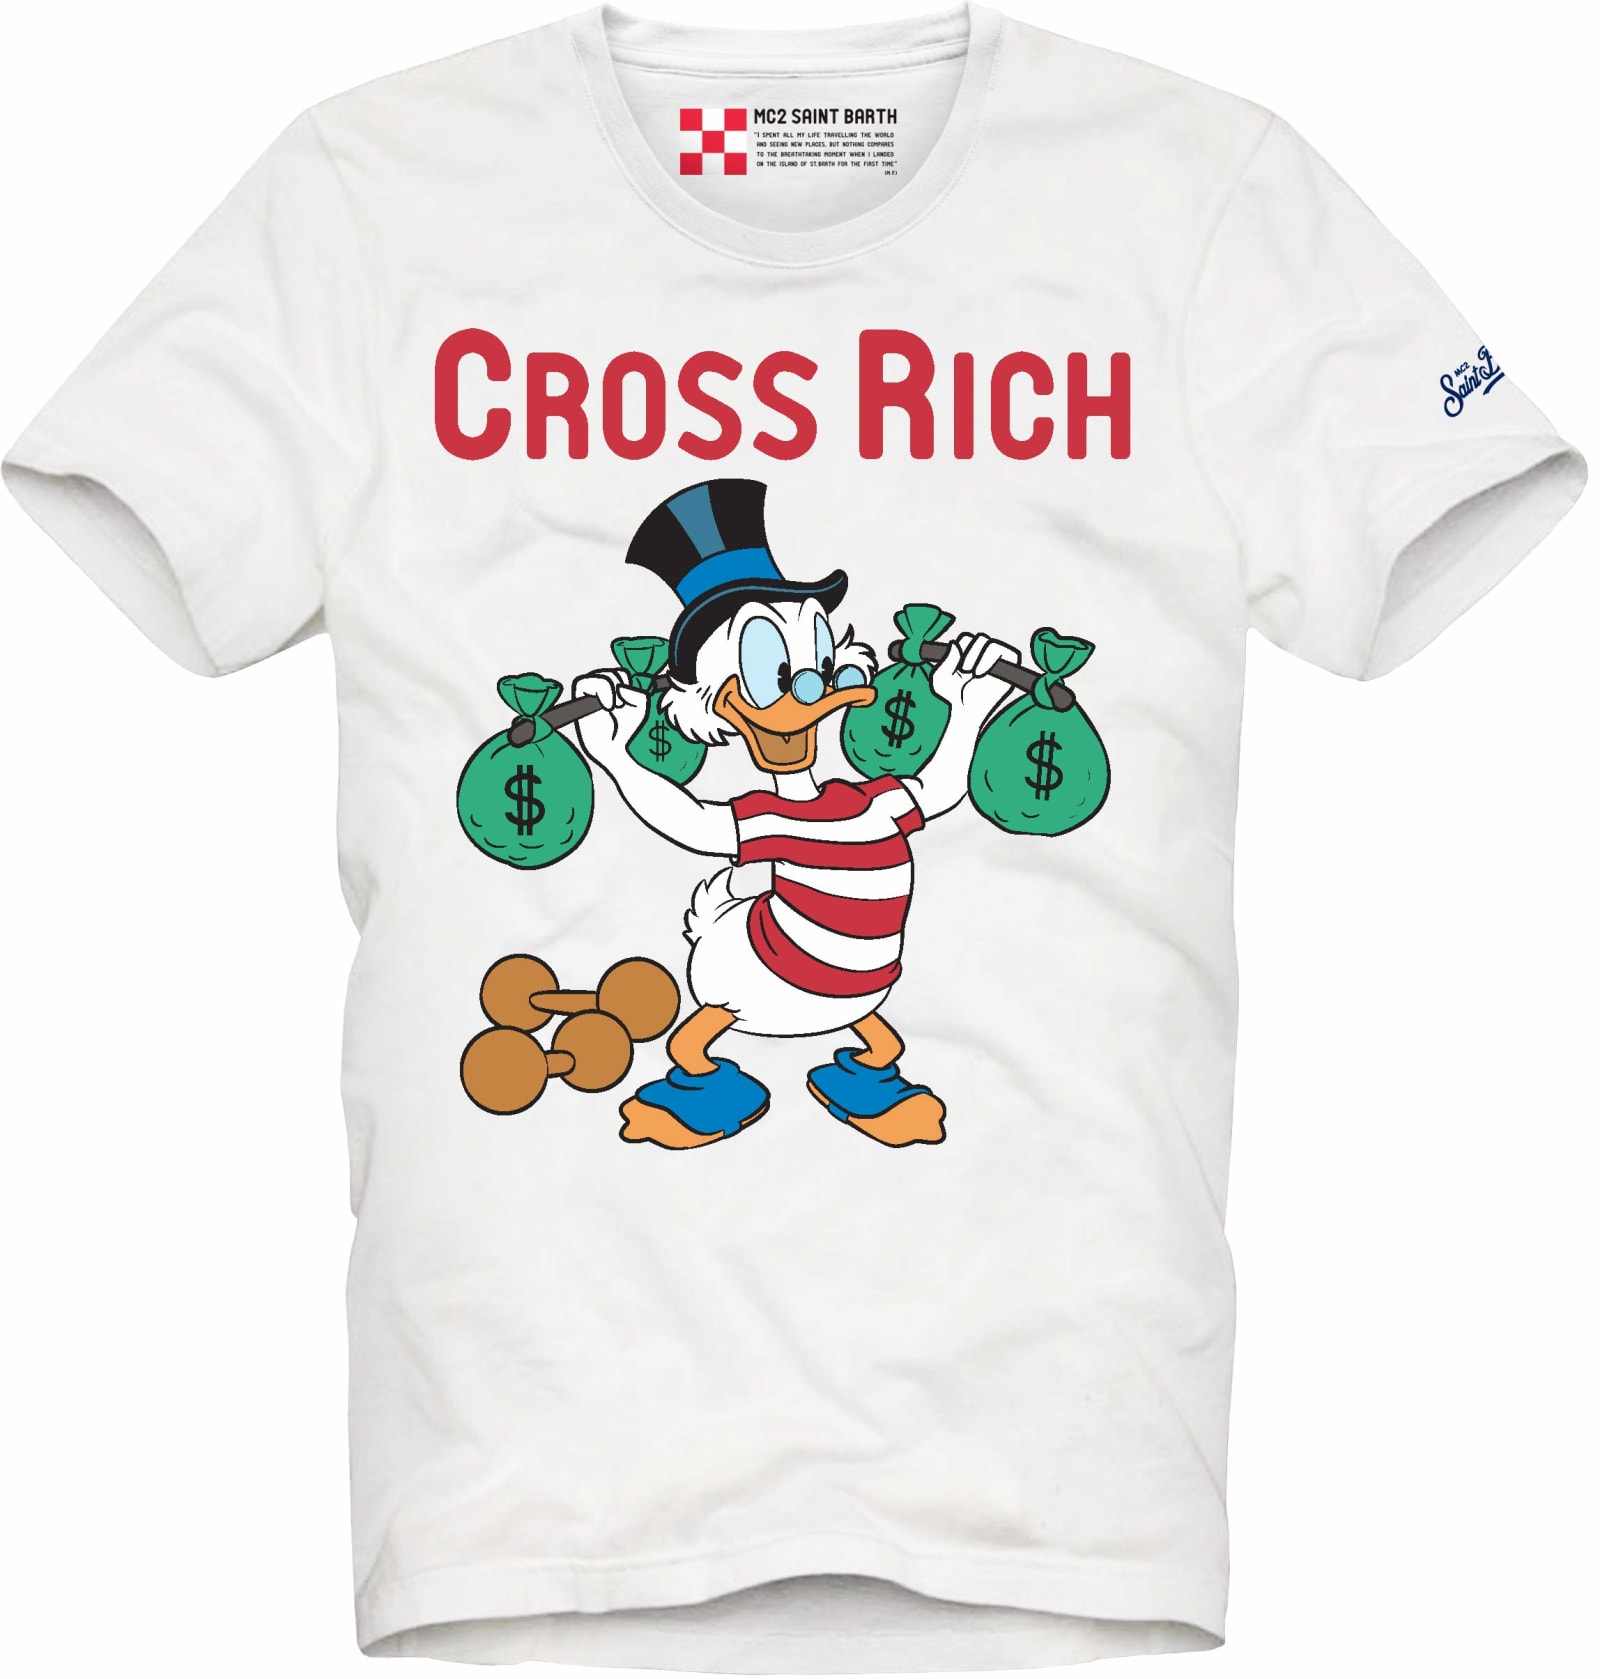 MC2 Saint Barth Cross Rich Printed White T-shirt - Disney Special Edition ©